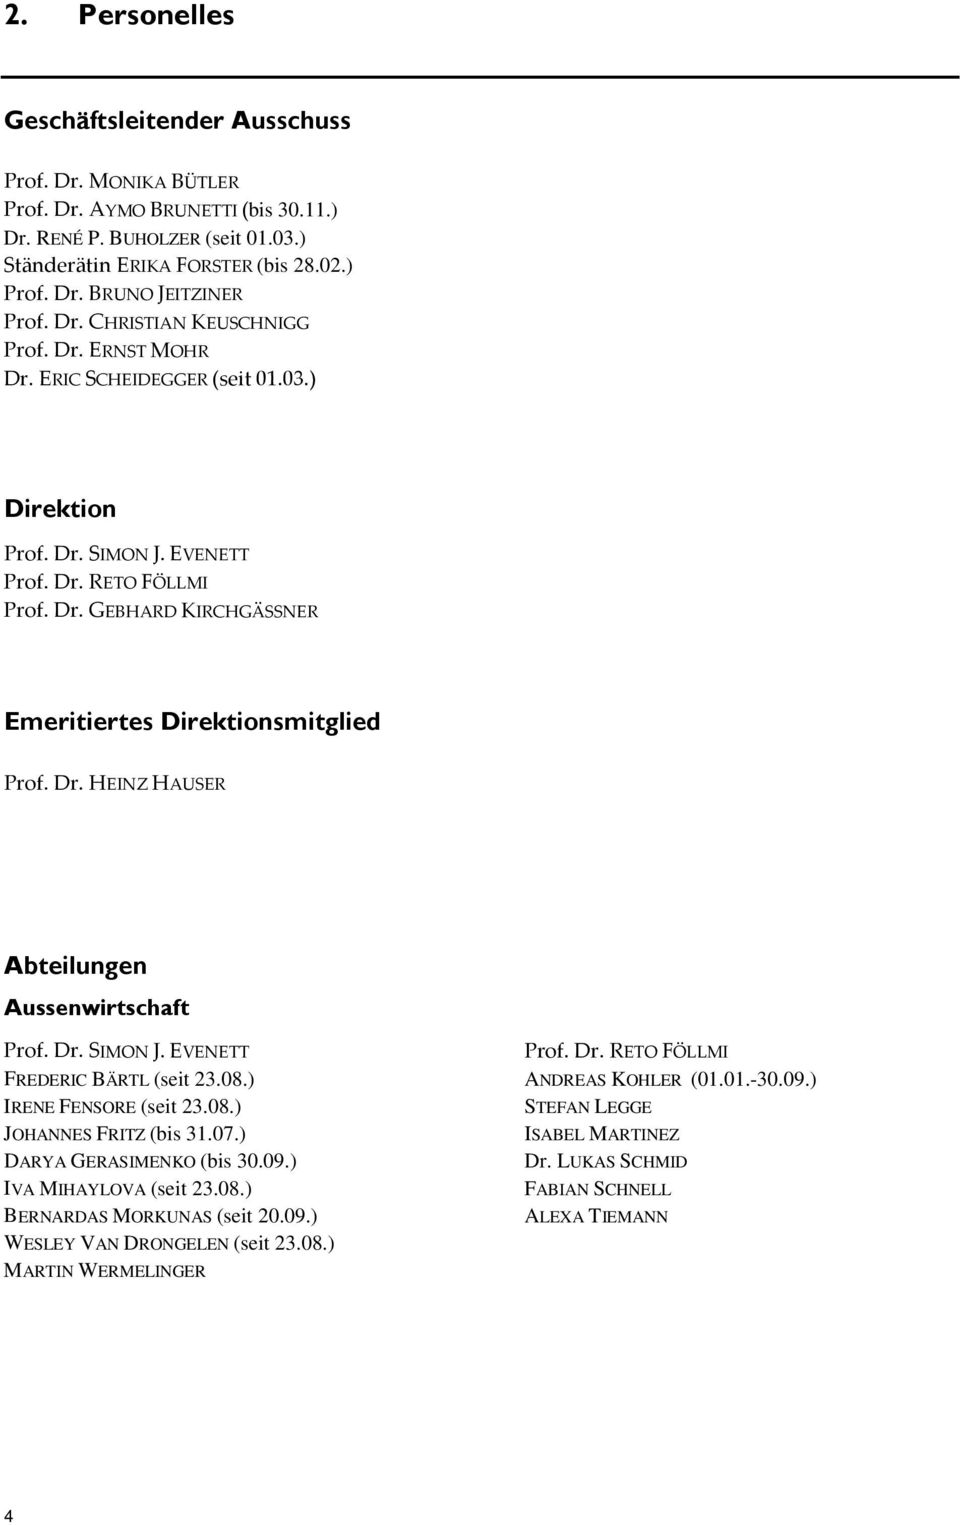 Dr. HEINZ HAUSER Abteilungen Aussenwirtschaft Prof. Dr. SIMON J. EVENETT Prof. Dr. RETO FÖLLMI FREDERIC BÄRTL (seit 23.08.) ANDREAS KOHLER (01.01.-30.09.) IRENE FENSORE (seit 23.08.) STEFAN LEGGE JOHANNES FRITZ (bis 31.